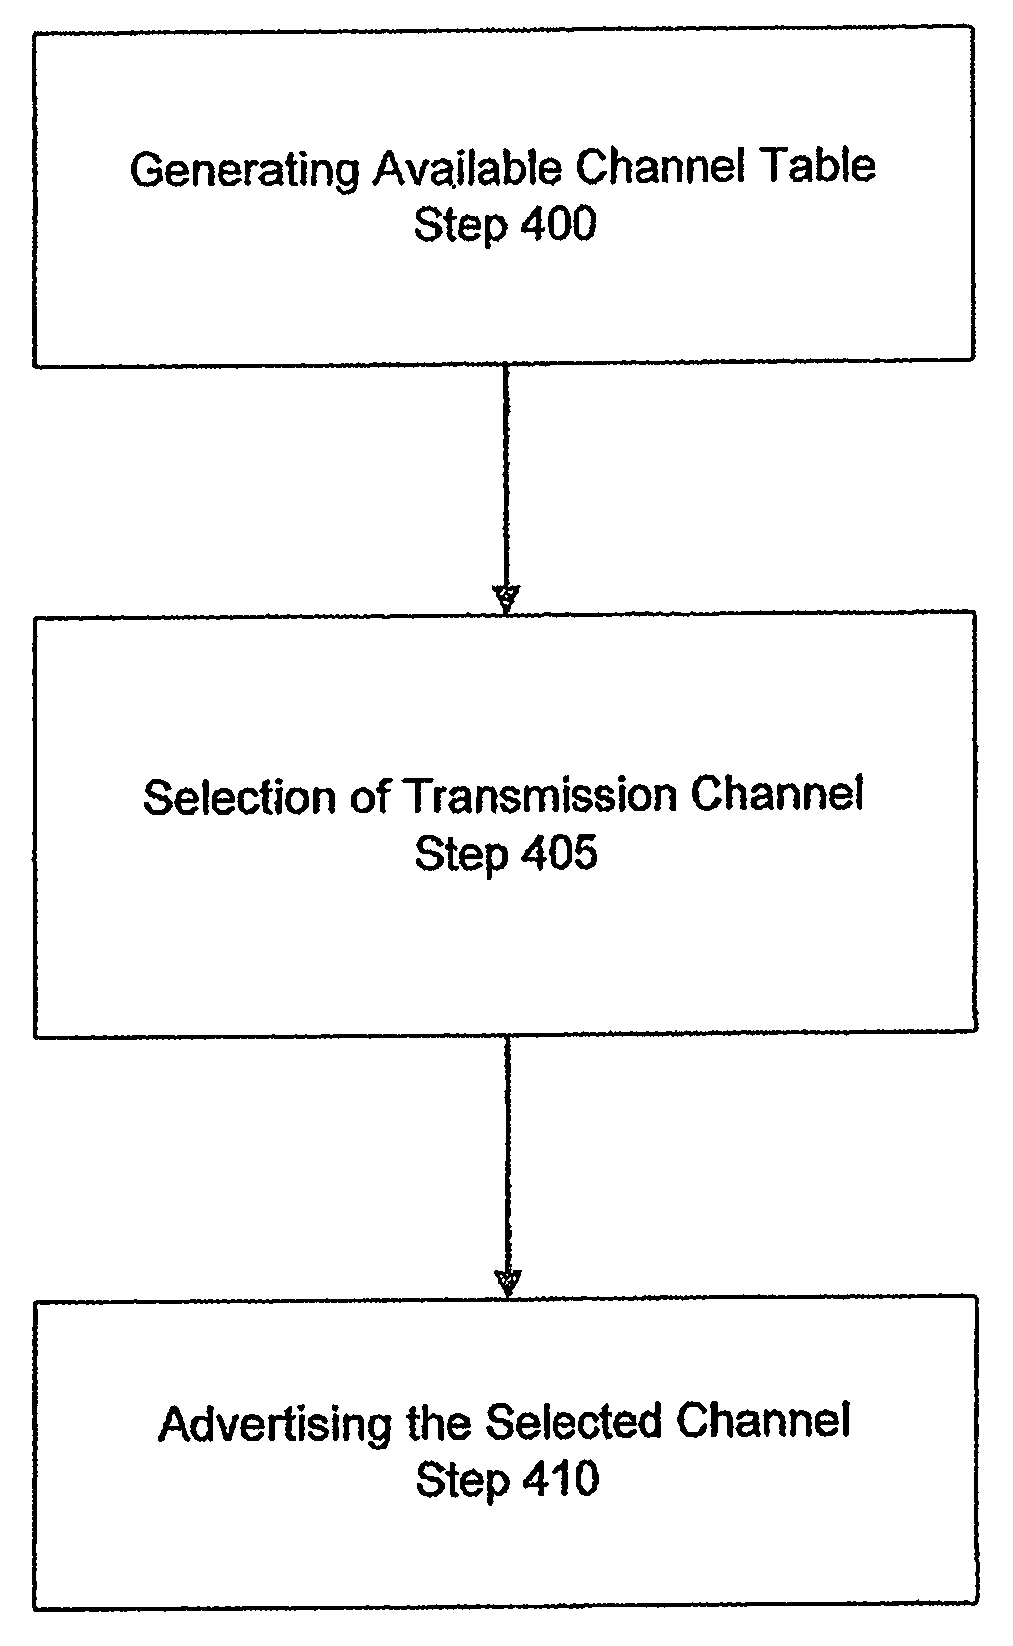 Method for determining transmission channels for a LPG based vehicle communication network